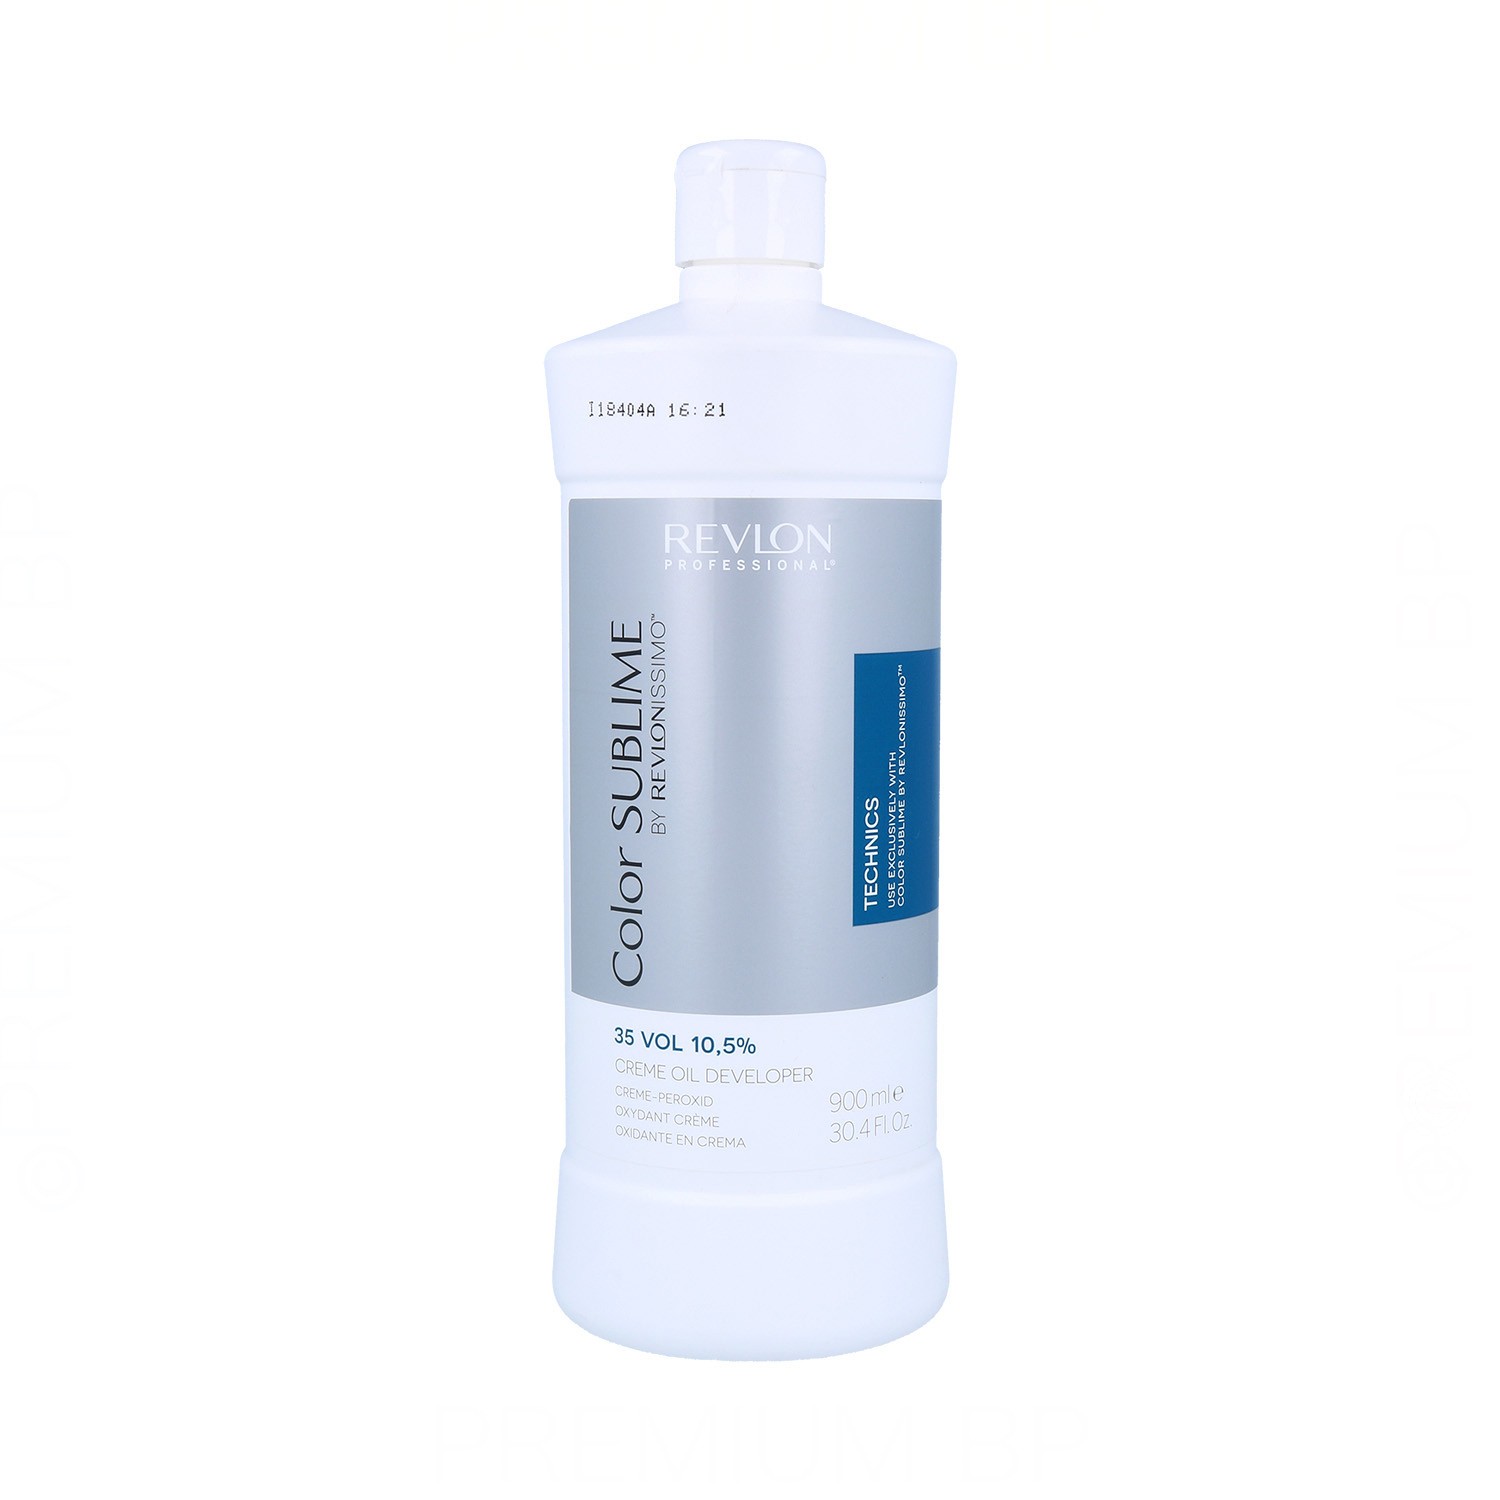 Revlonissimo Color Sublime Cream Oil Oxydant 35Vol (10.5%) 900 ml